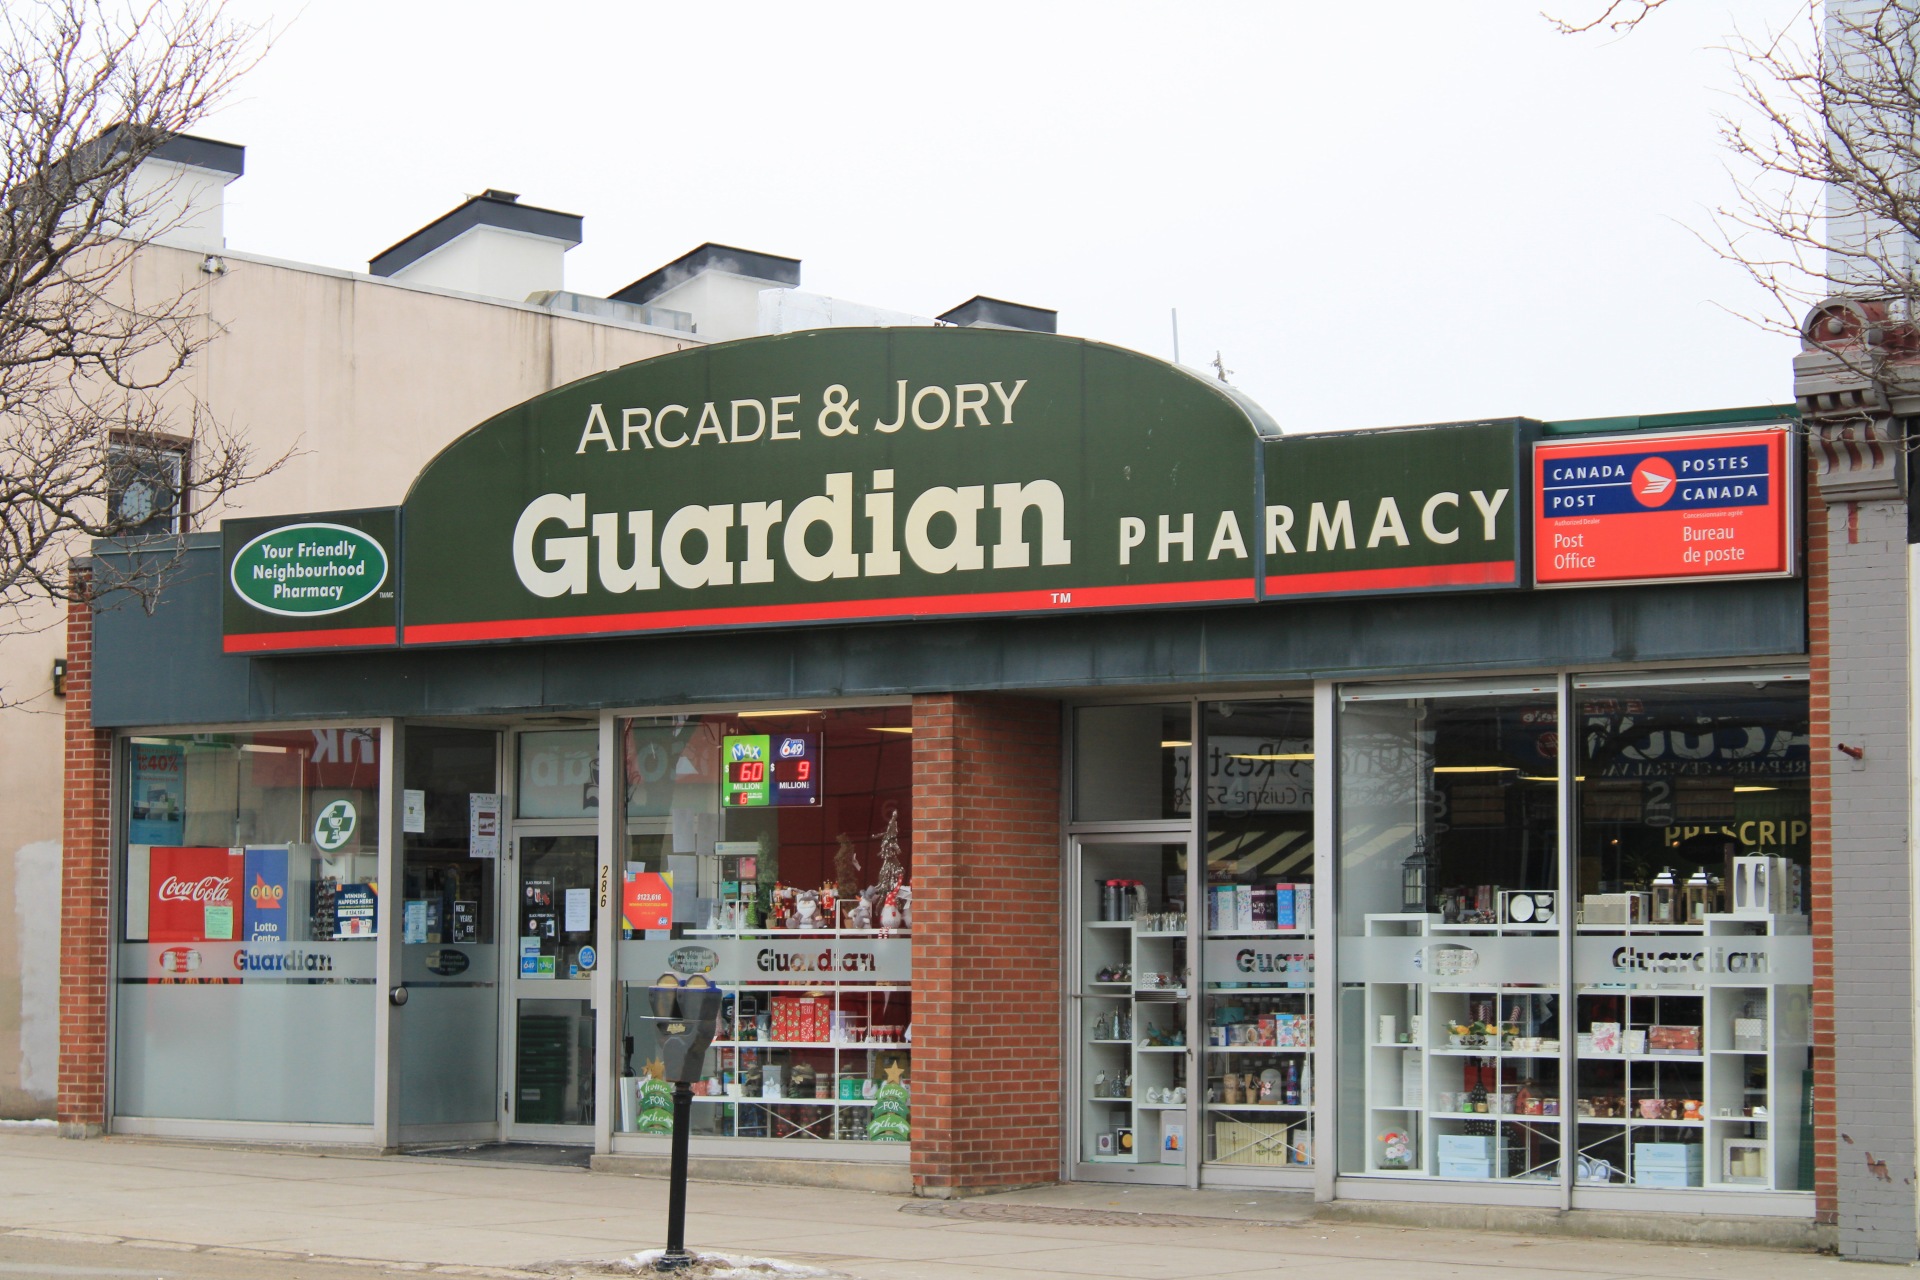 Arcade and Jory Guardian Pharmacy